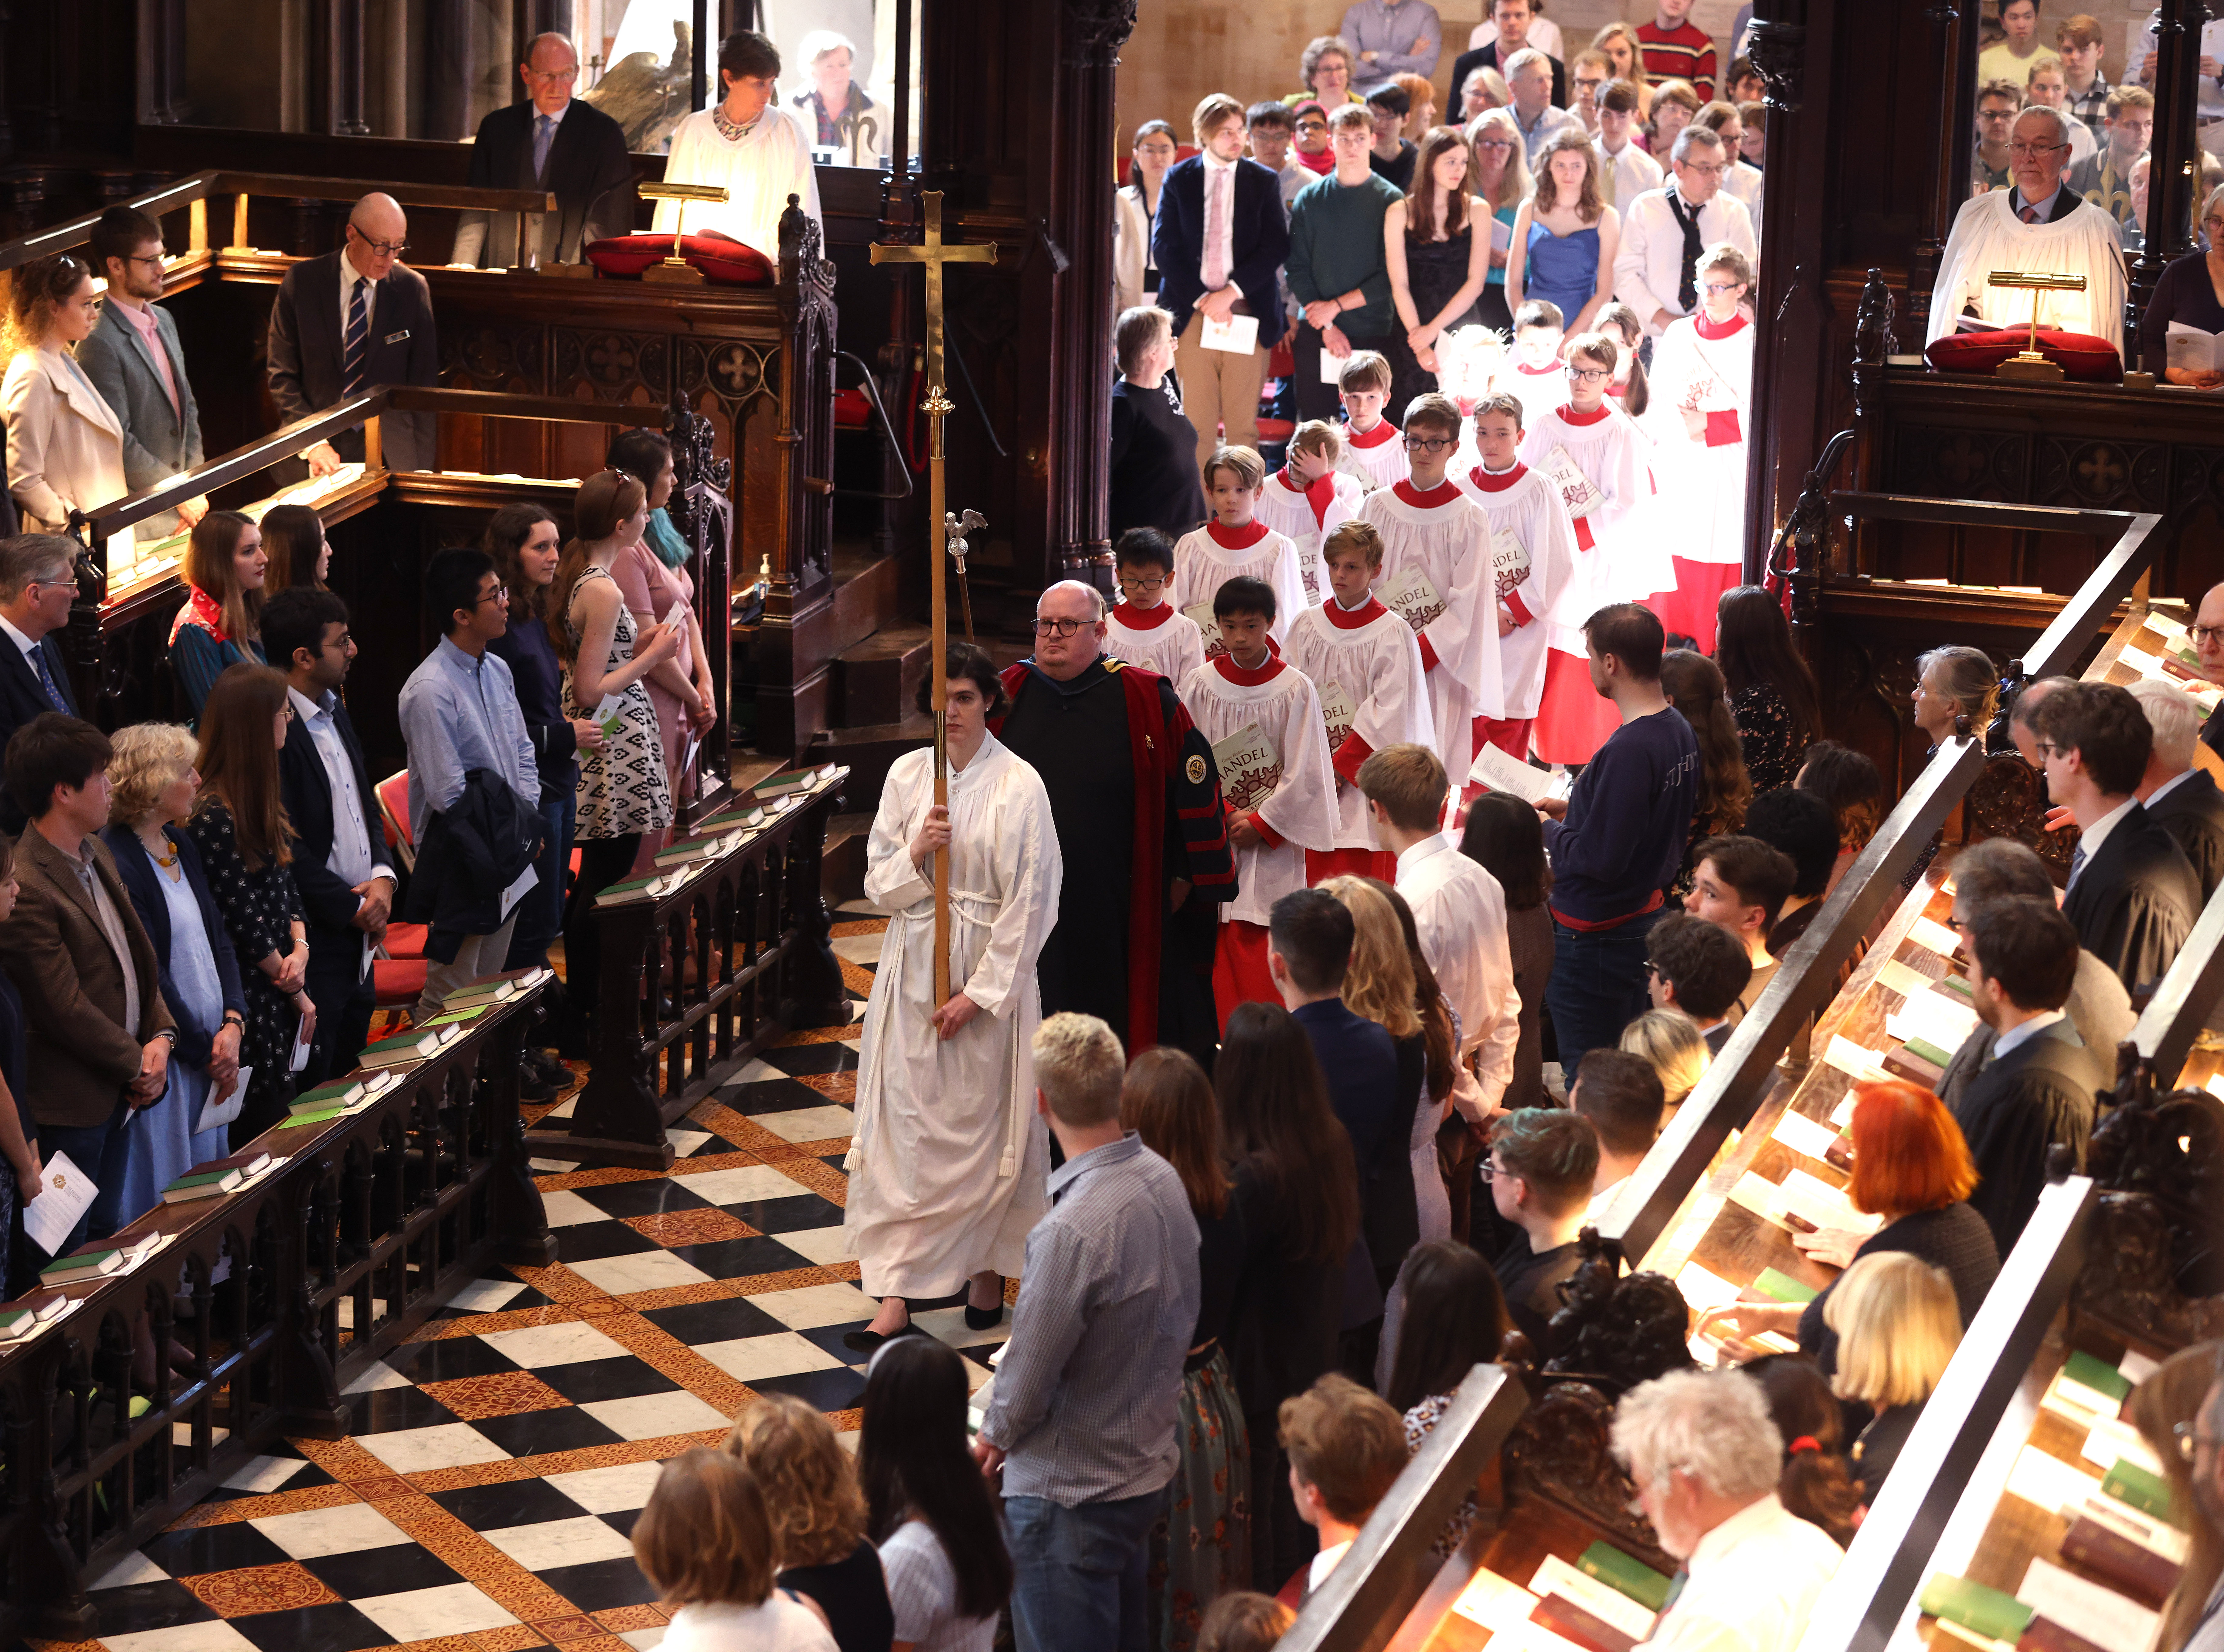 The Choir parades into the Coronation Service